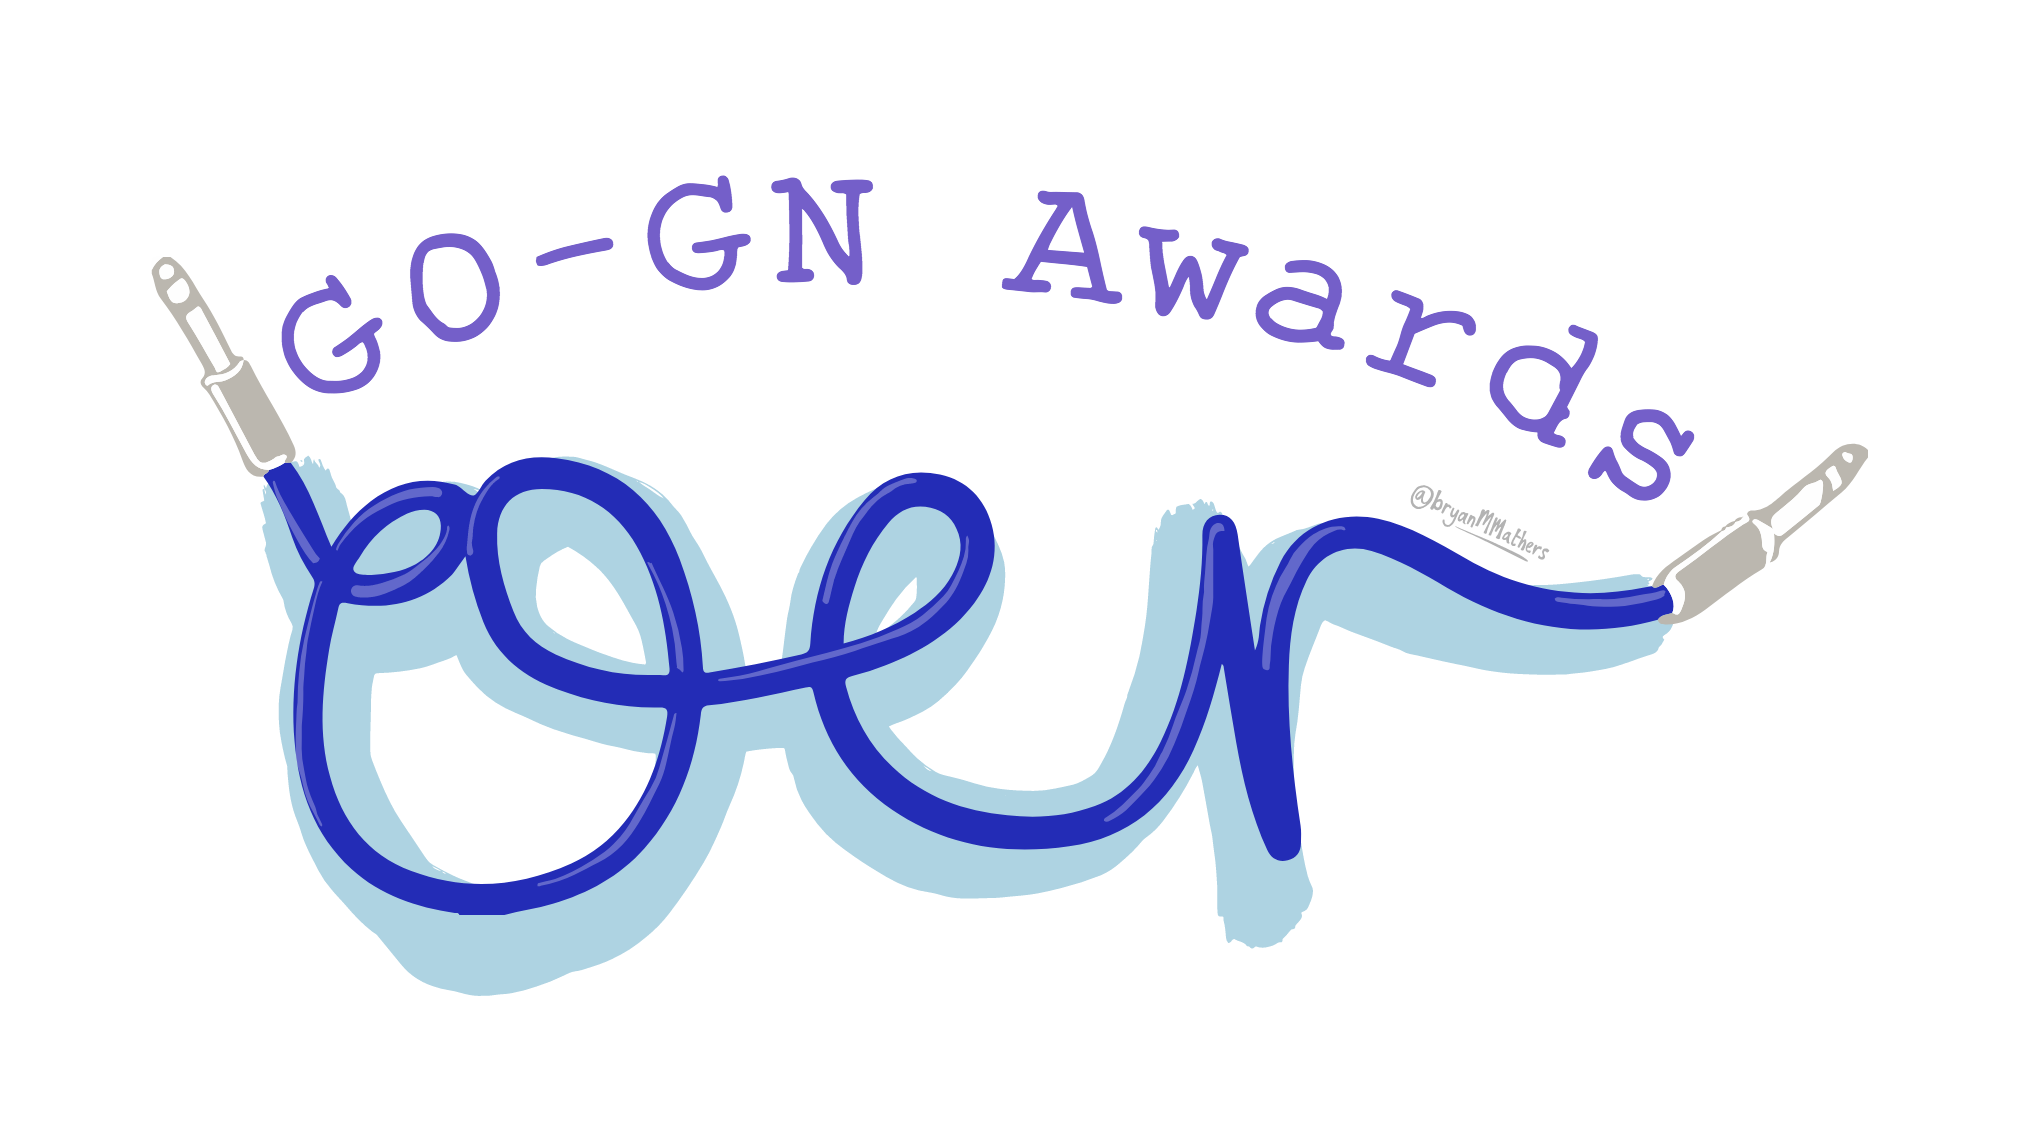 2018 GO-GN Award Winners